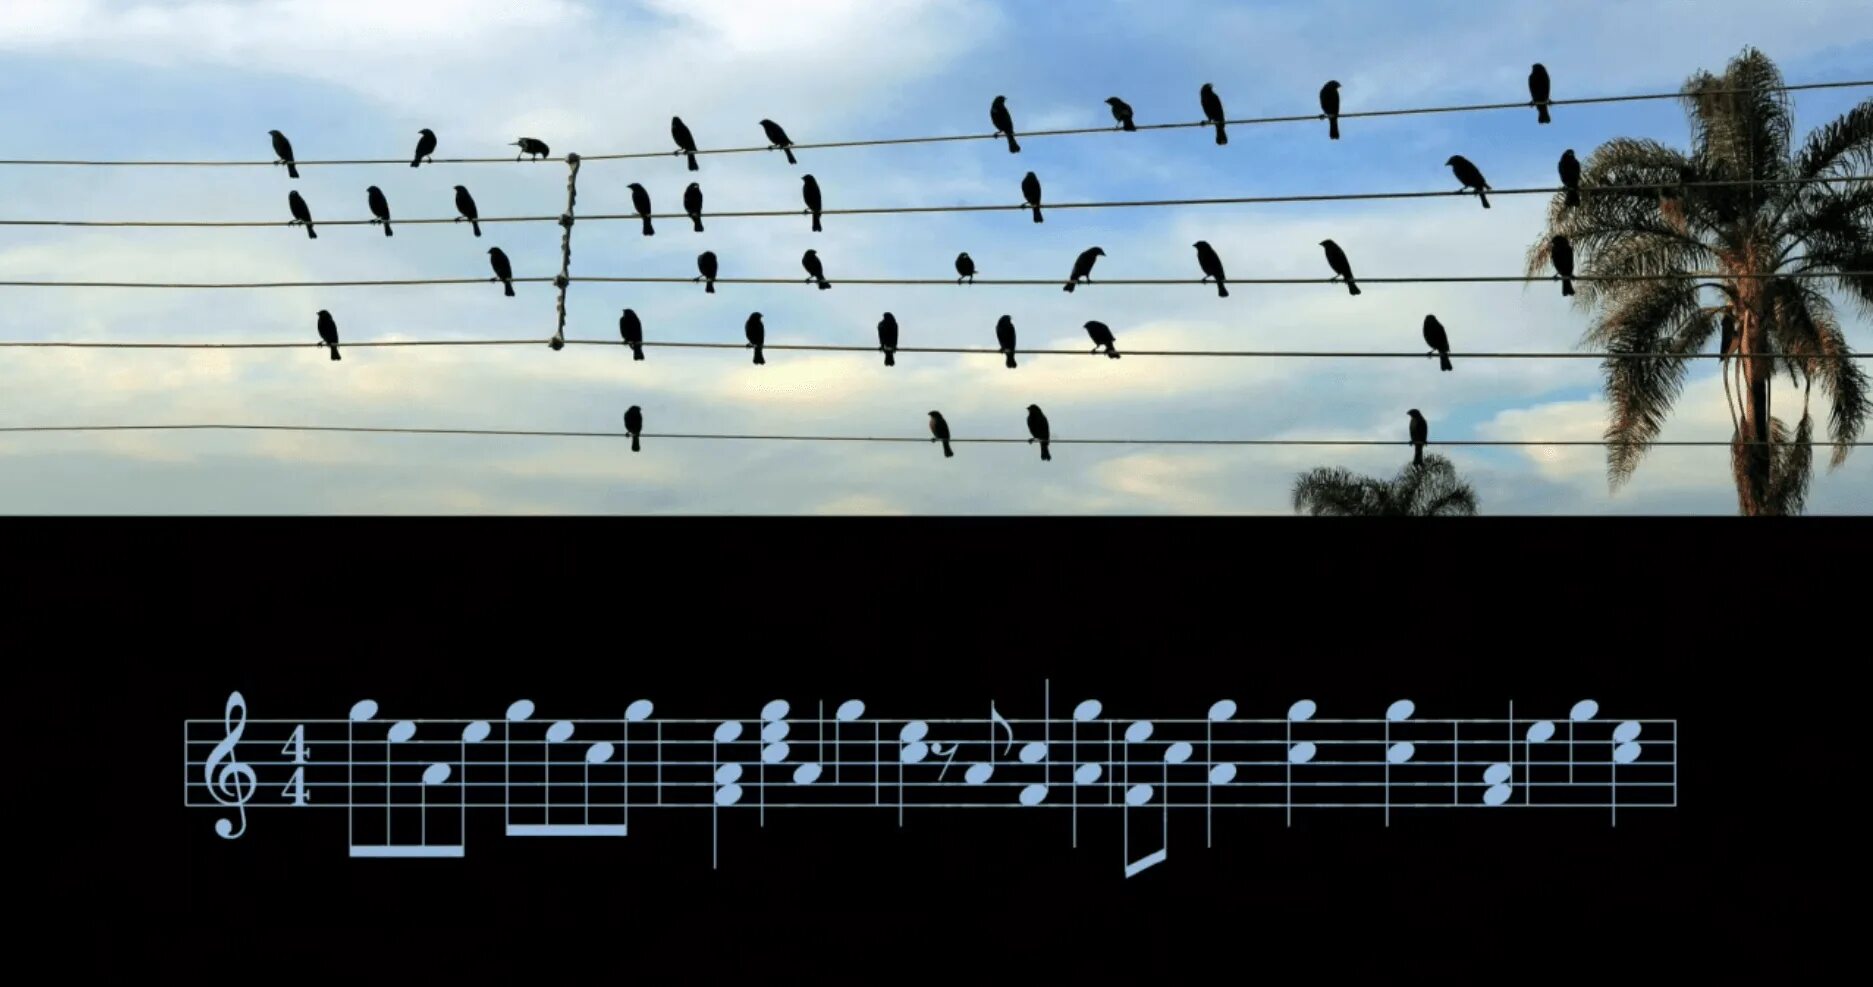 Птички на проводах. Ритм в природе. Птицы сидят на проводах. Ритм музыкальный. Возвращаются птицы песни